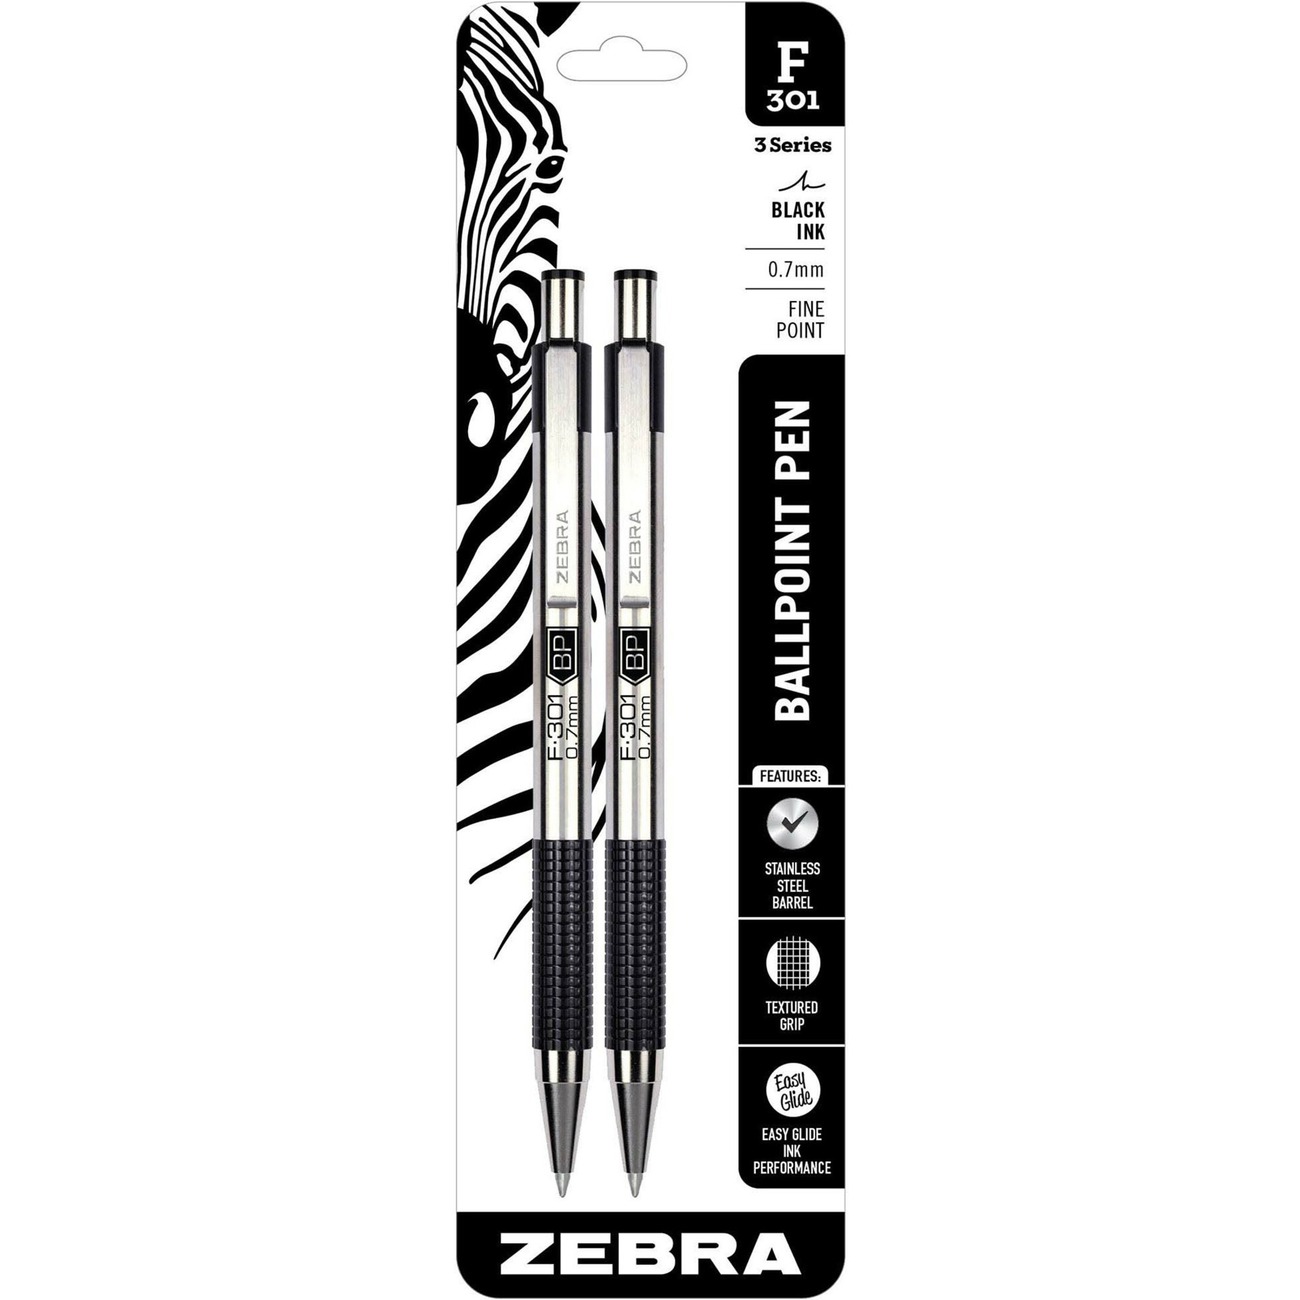 Lelix Felt Tip Pens, 15 Black Pens, 0.7mm Medium Point Felt Pens, Markers  Pens